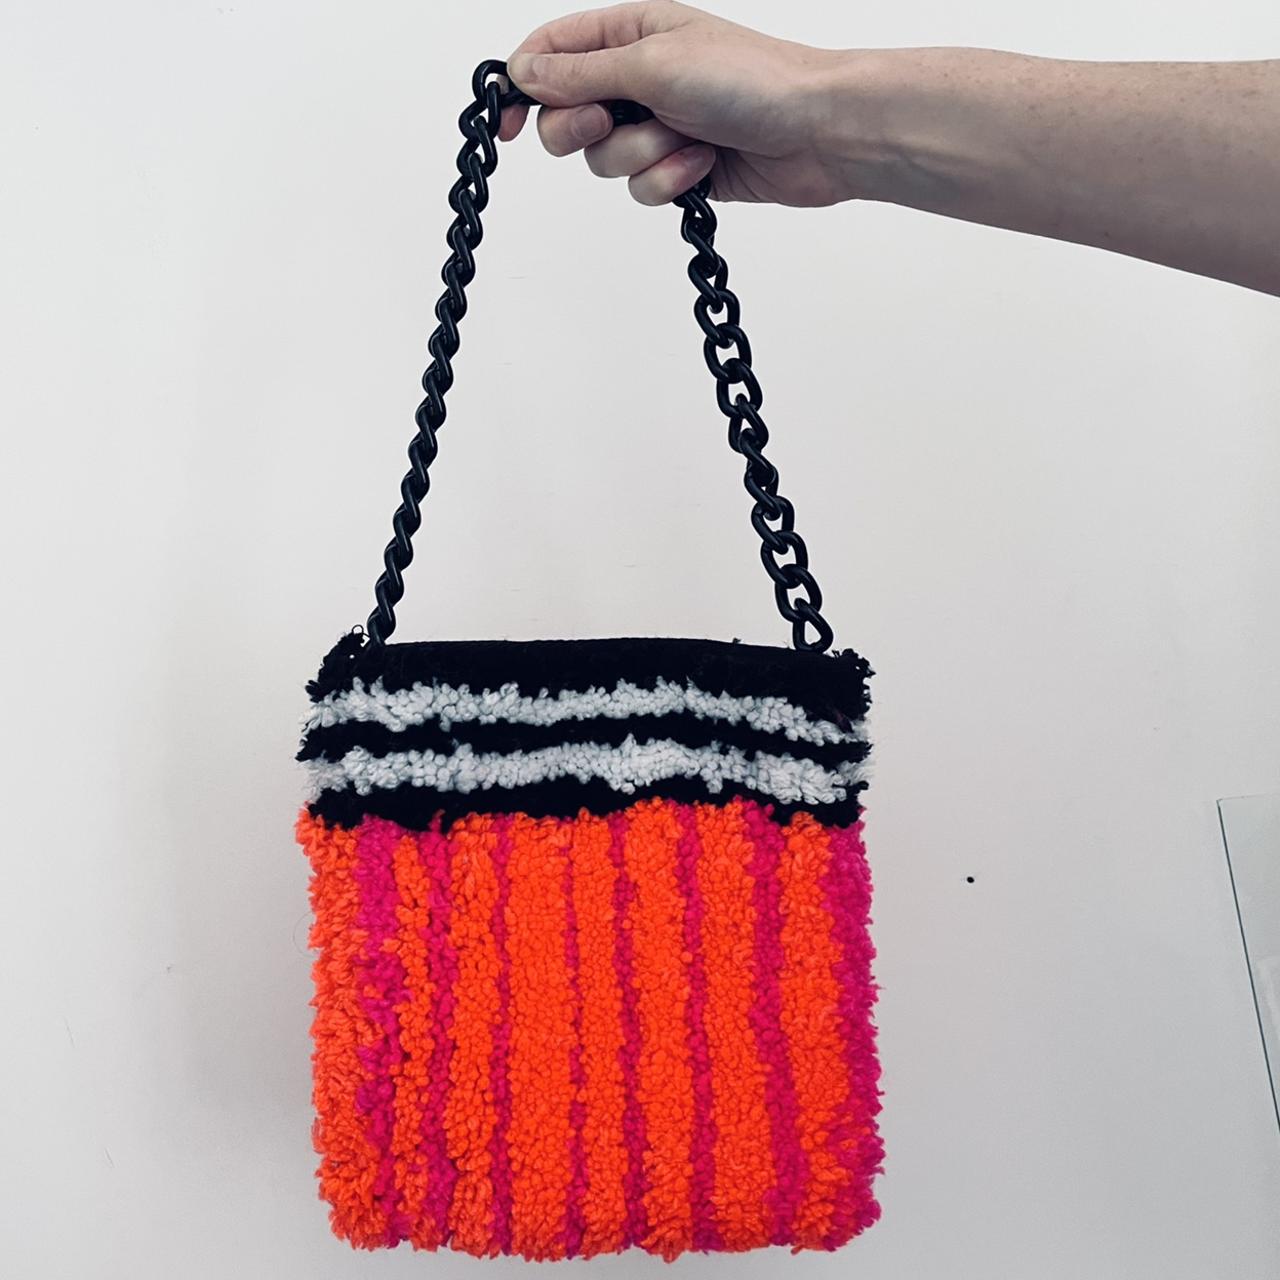 Product Image 1 - #Handmade #purse #bag #tufted #depop
Made